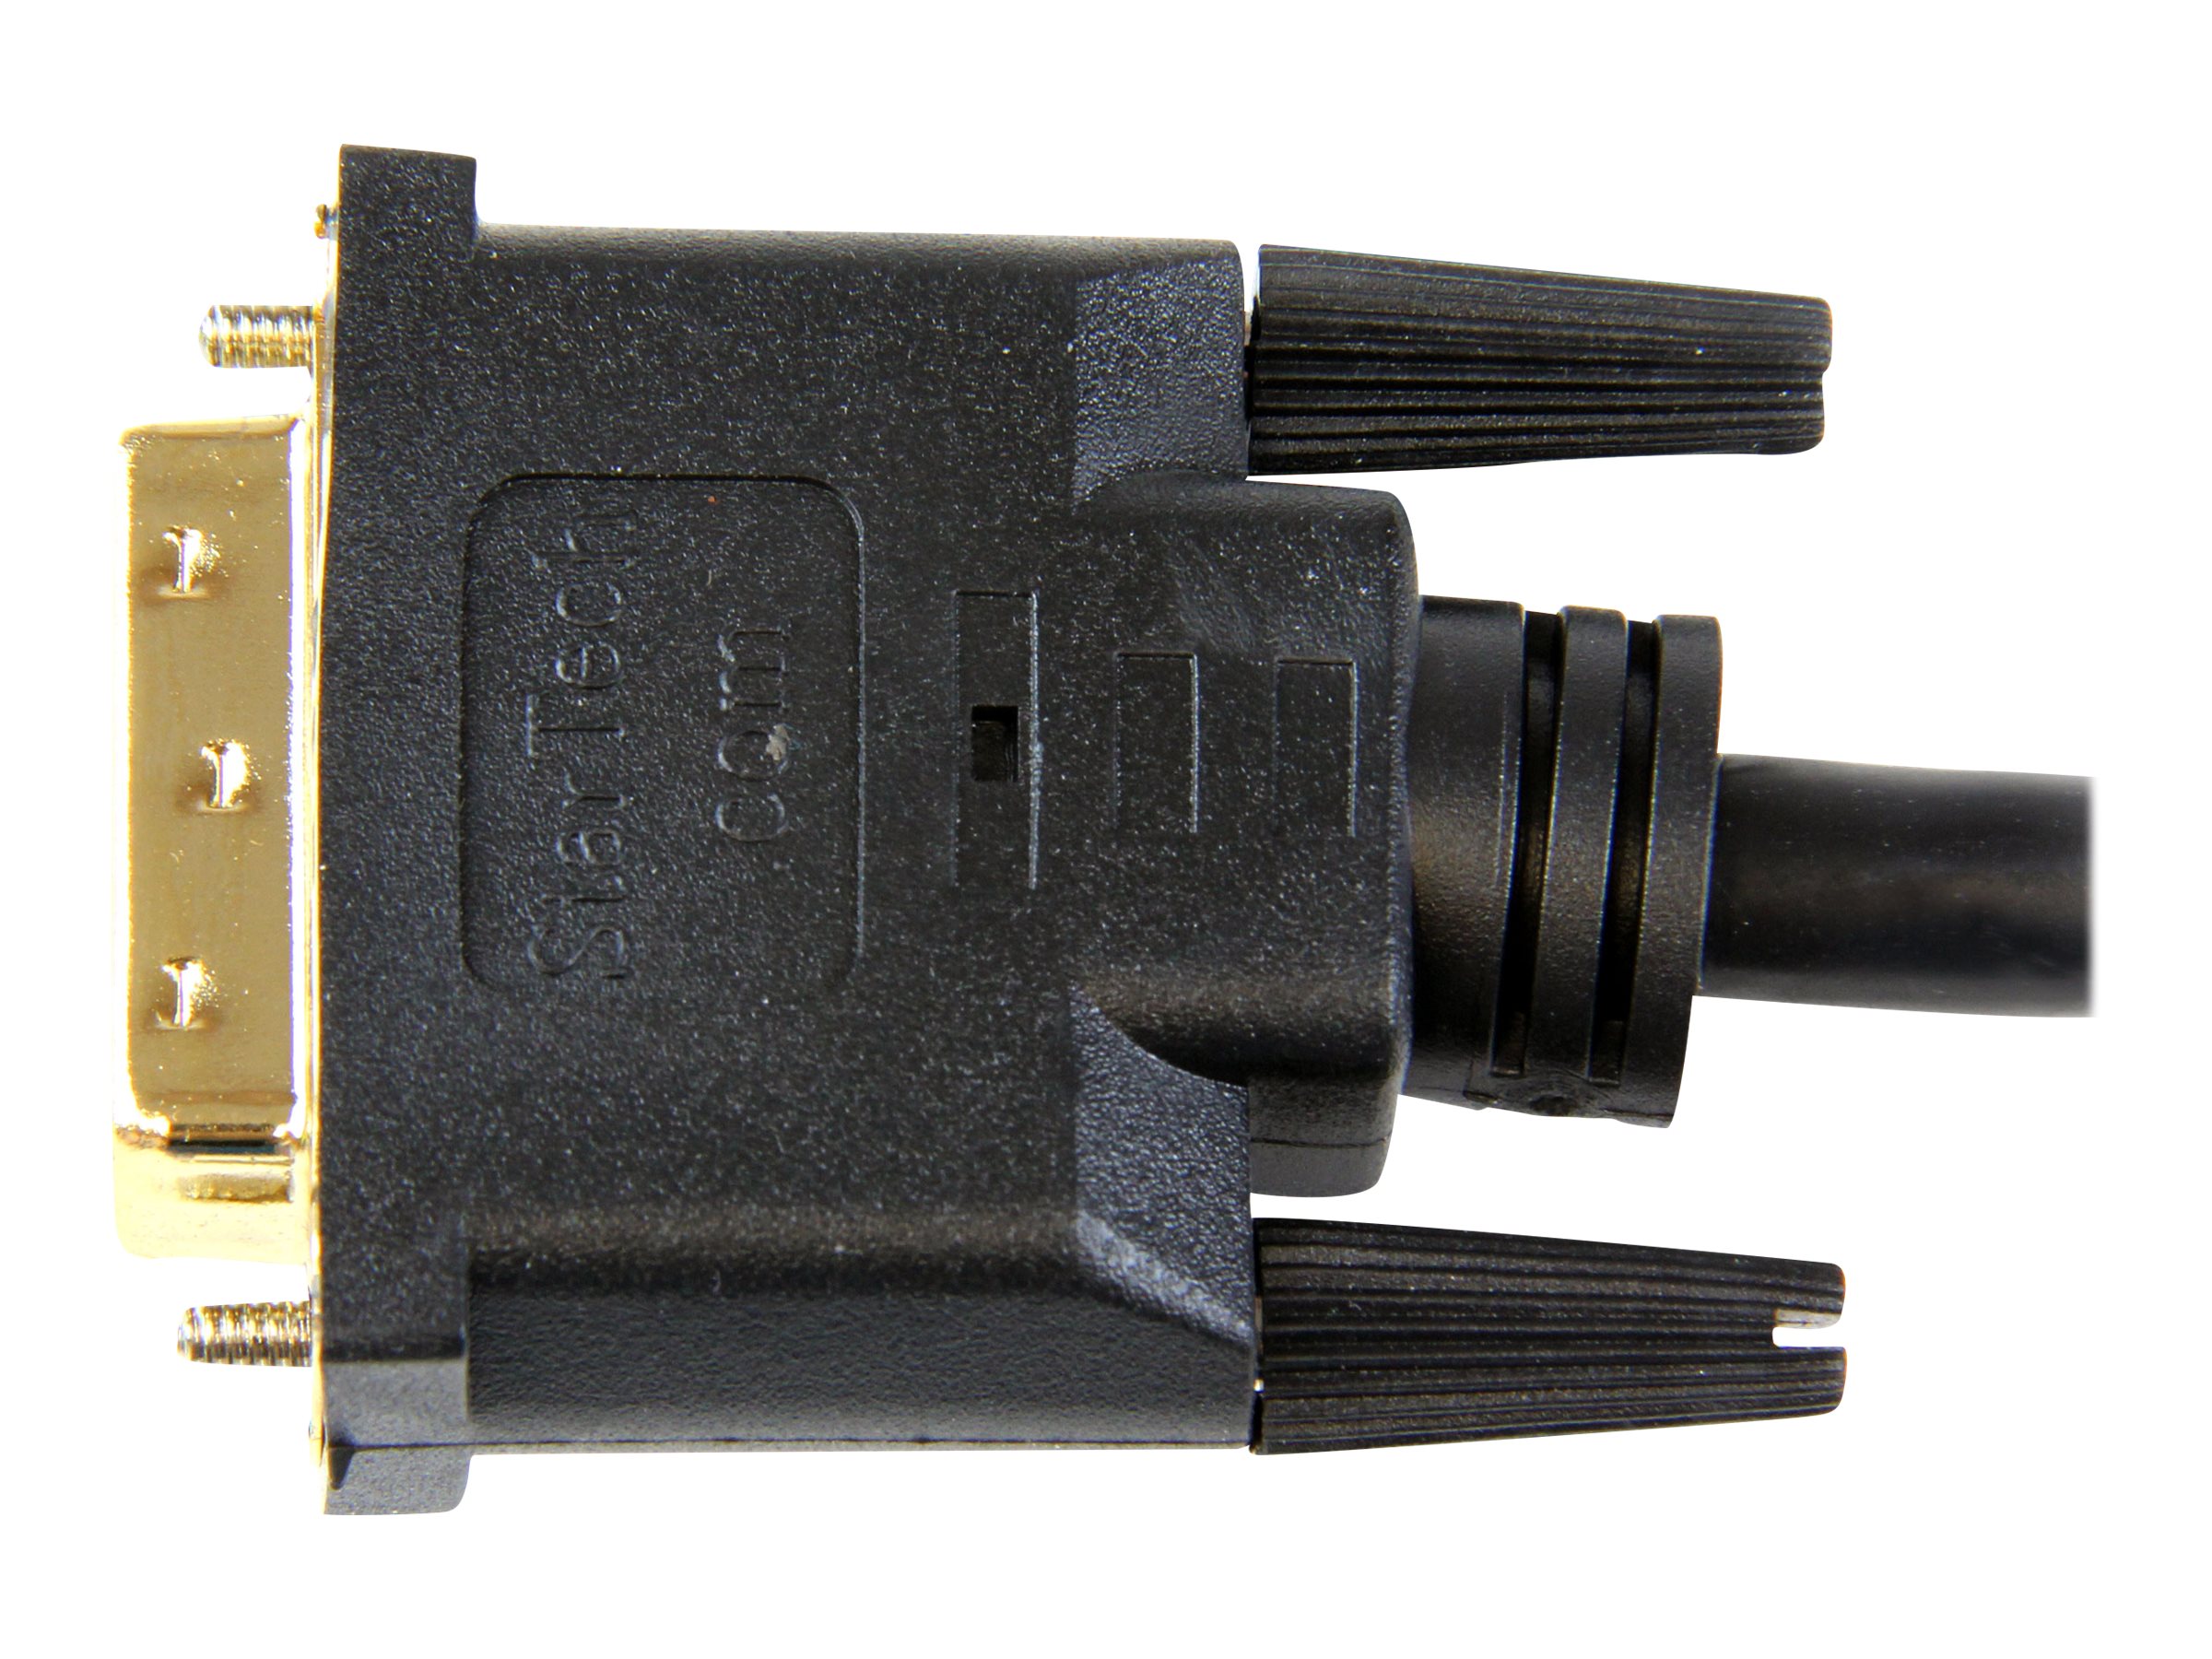 StarTech.com 1,8m HDMI auf DVI-D Kabel - HDMI / DVI Anschlusskabel - St/St - Videokabel - 1.83 m